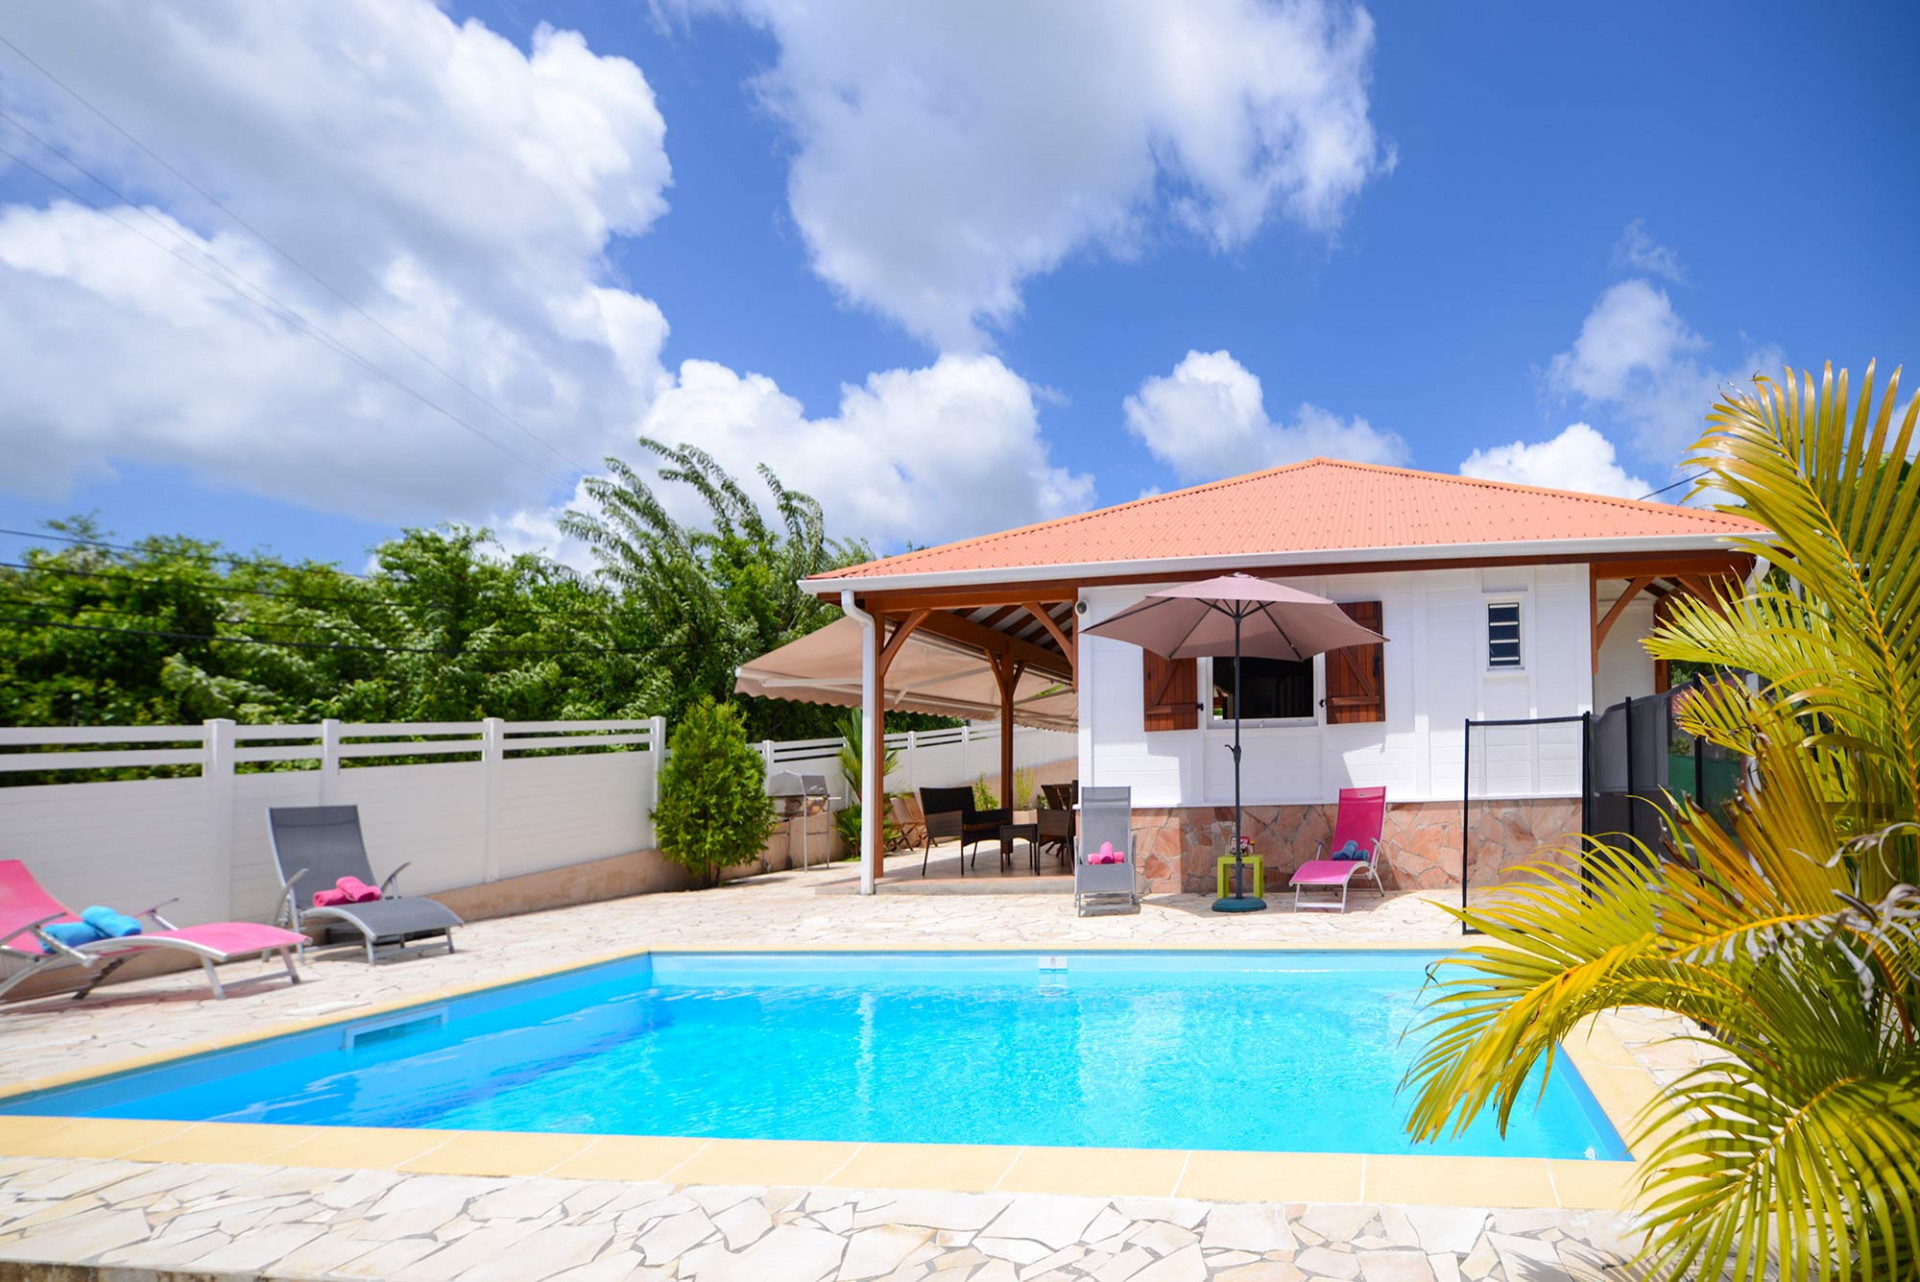 Villa SOHA Location Martinique le Diamant with pool and garden - Bienvenue à la Villa Soha